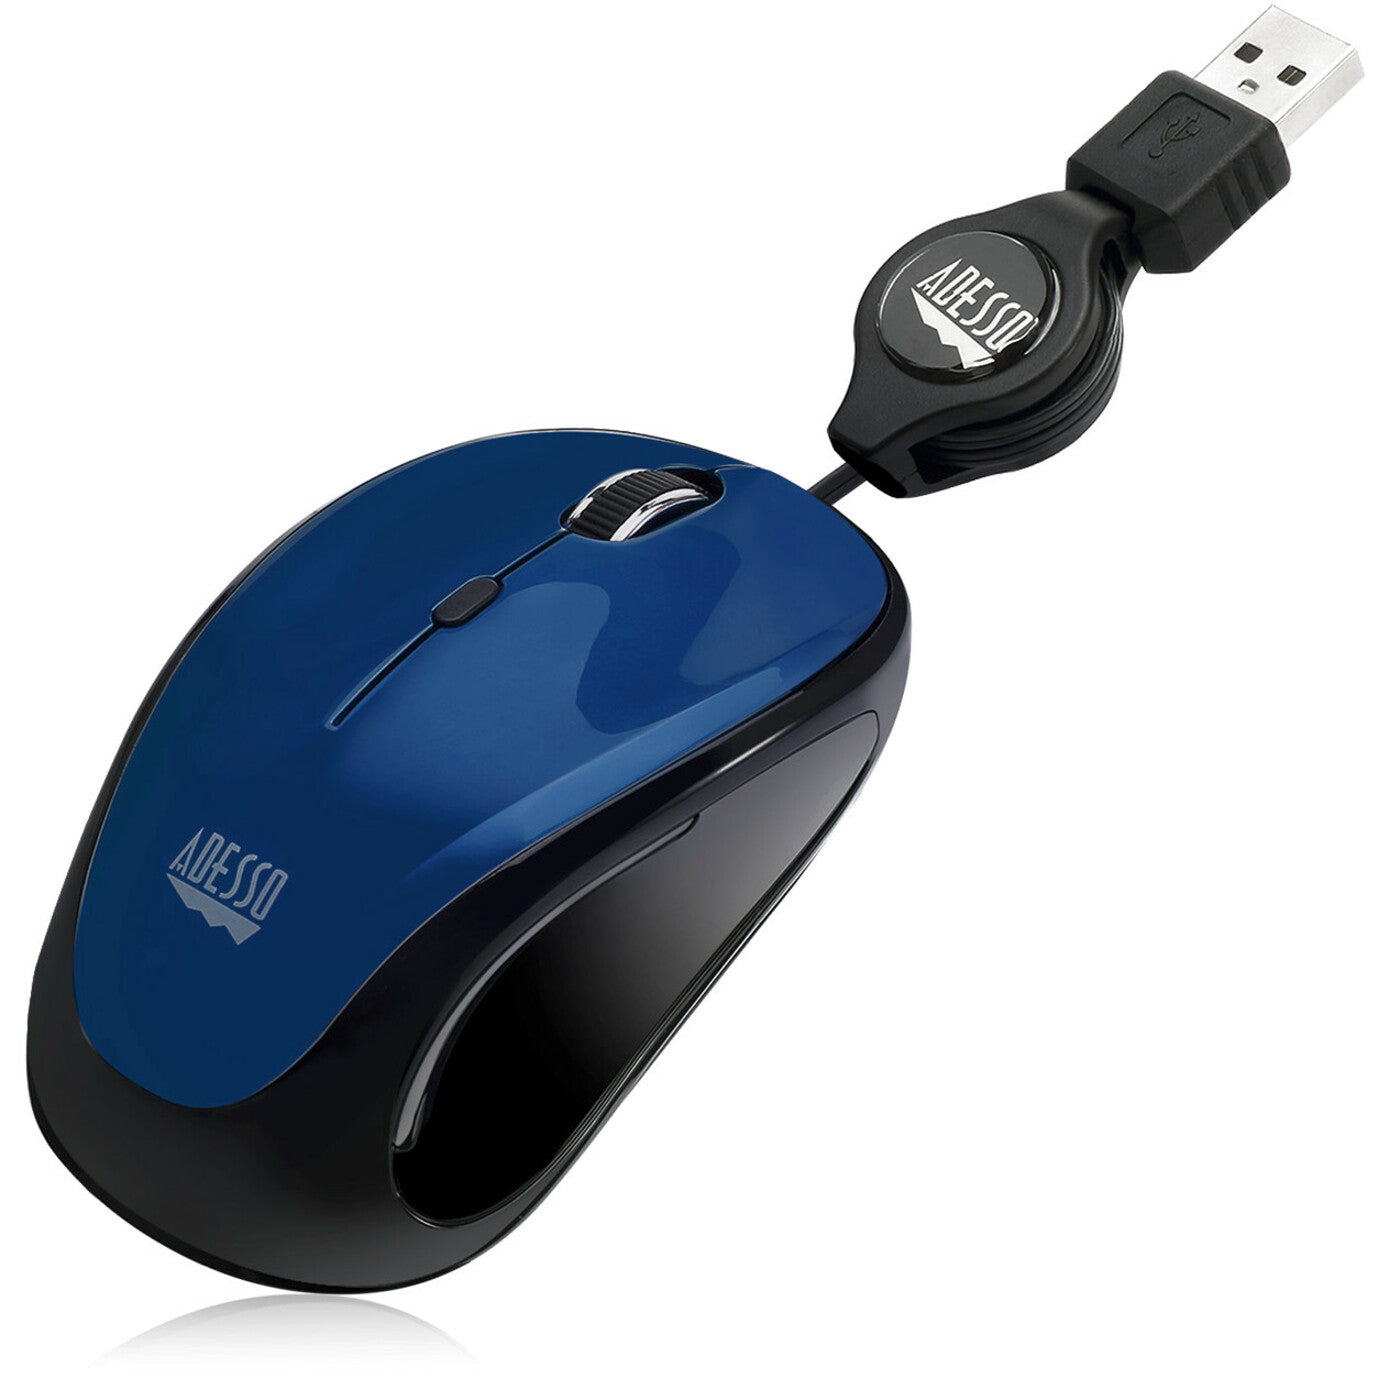 Adesso IMOUSE S8L USB Illuminated Retractable Mini Mouse, Ergonomic Fit, 1600 DPI, Blue